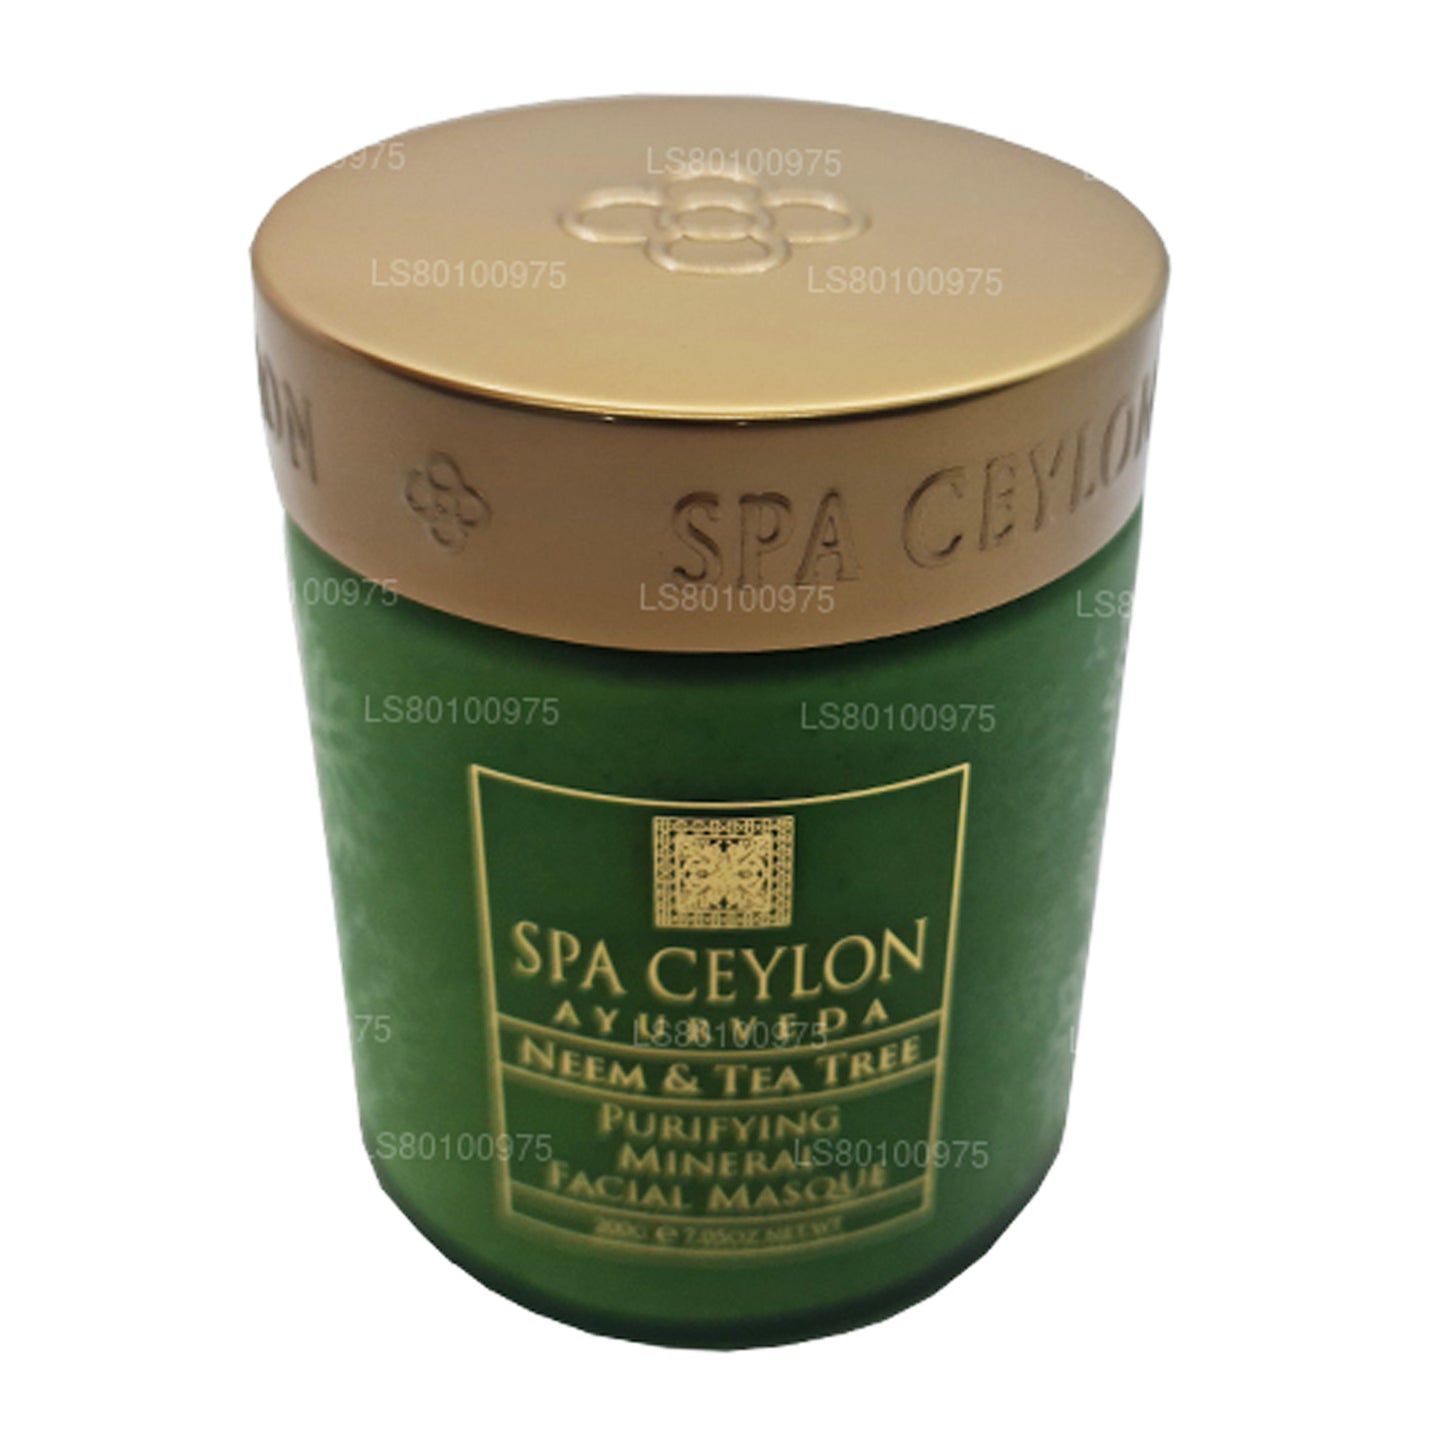 Spa Ceylon Neem og Tea Tree Rensende Mineral Masque (200g)